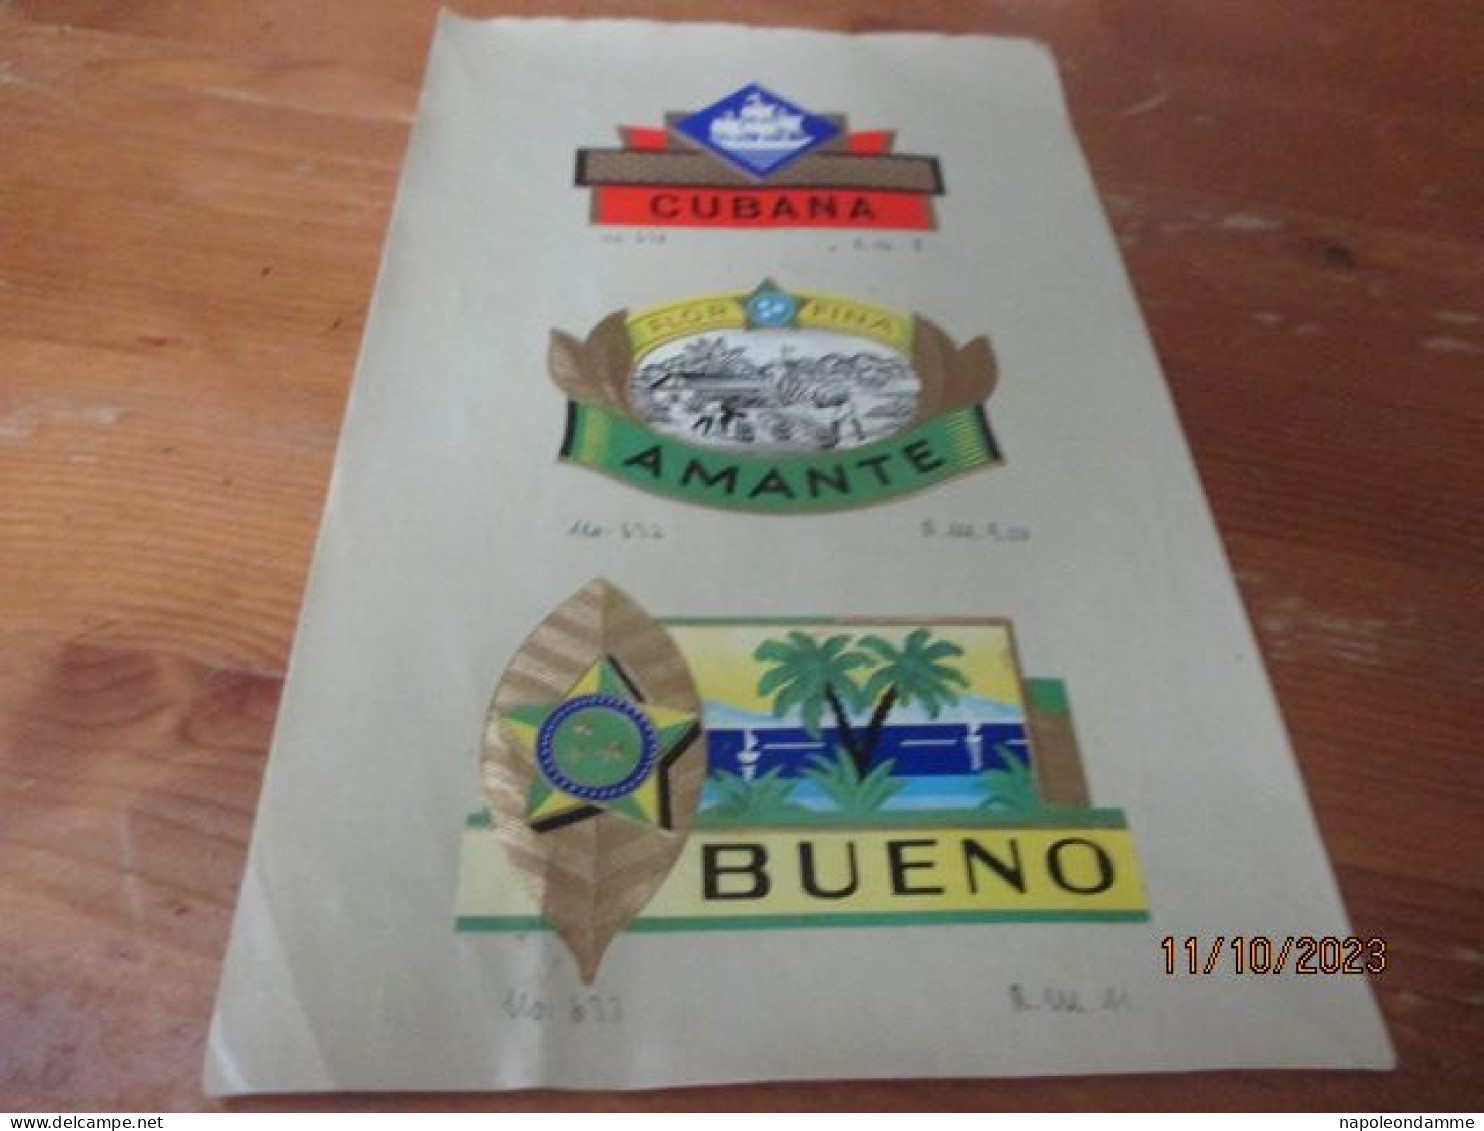 Etiketten Voorbeeldblad, 16 Cm X 25.50cm, Cubana, Amante, Bueno - Etichette